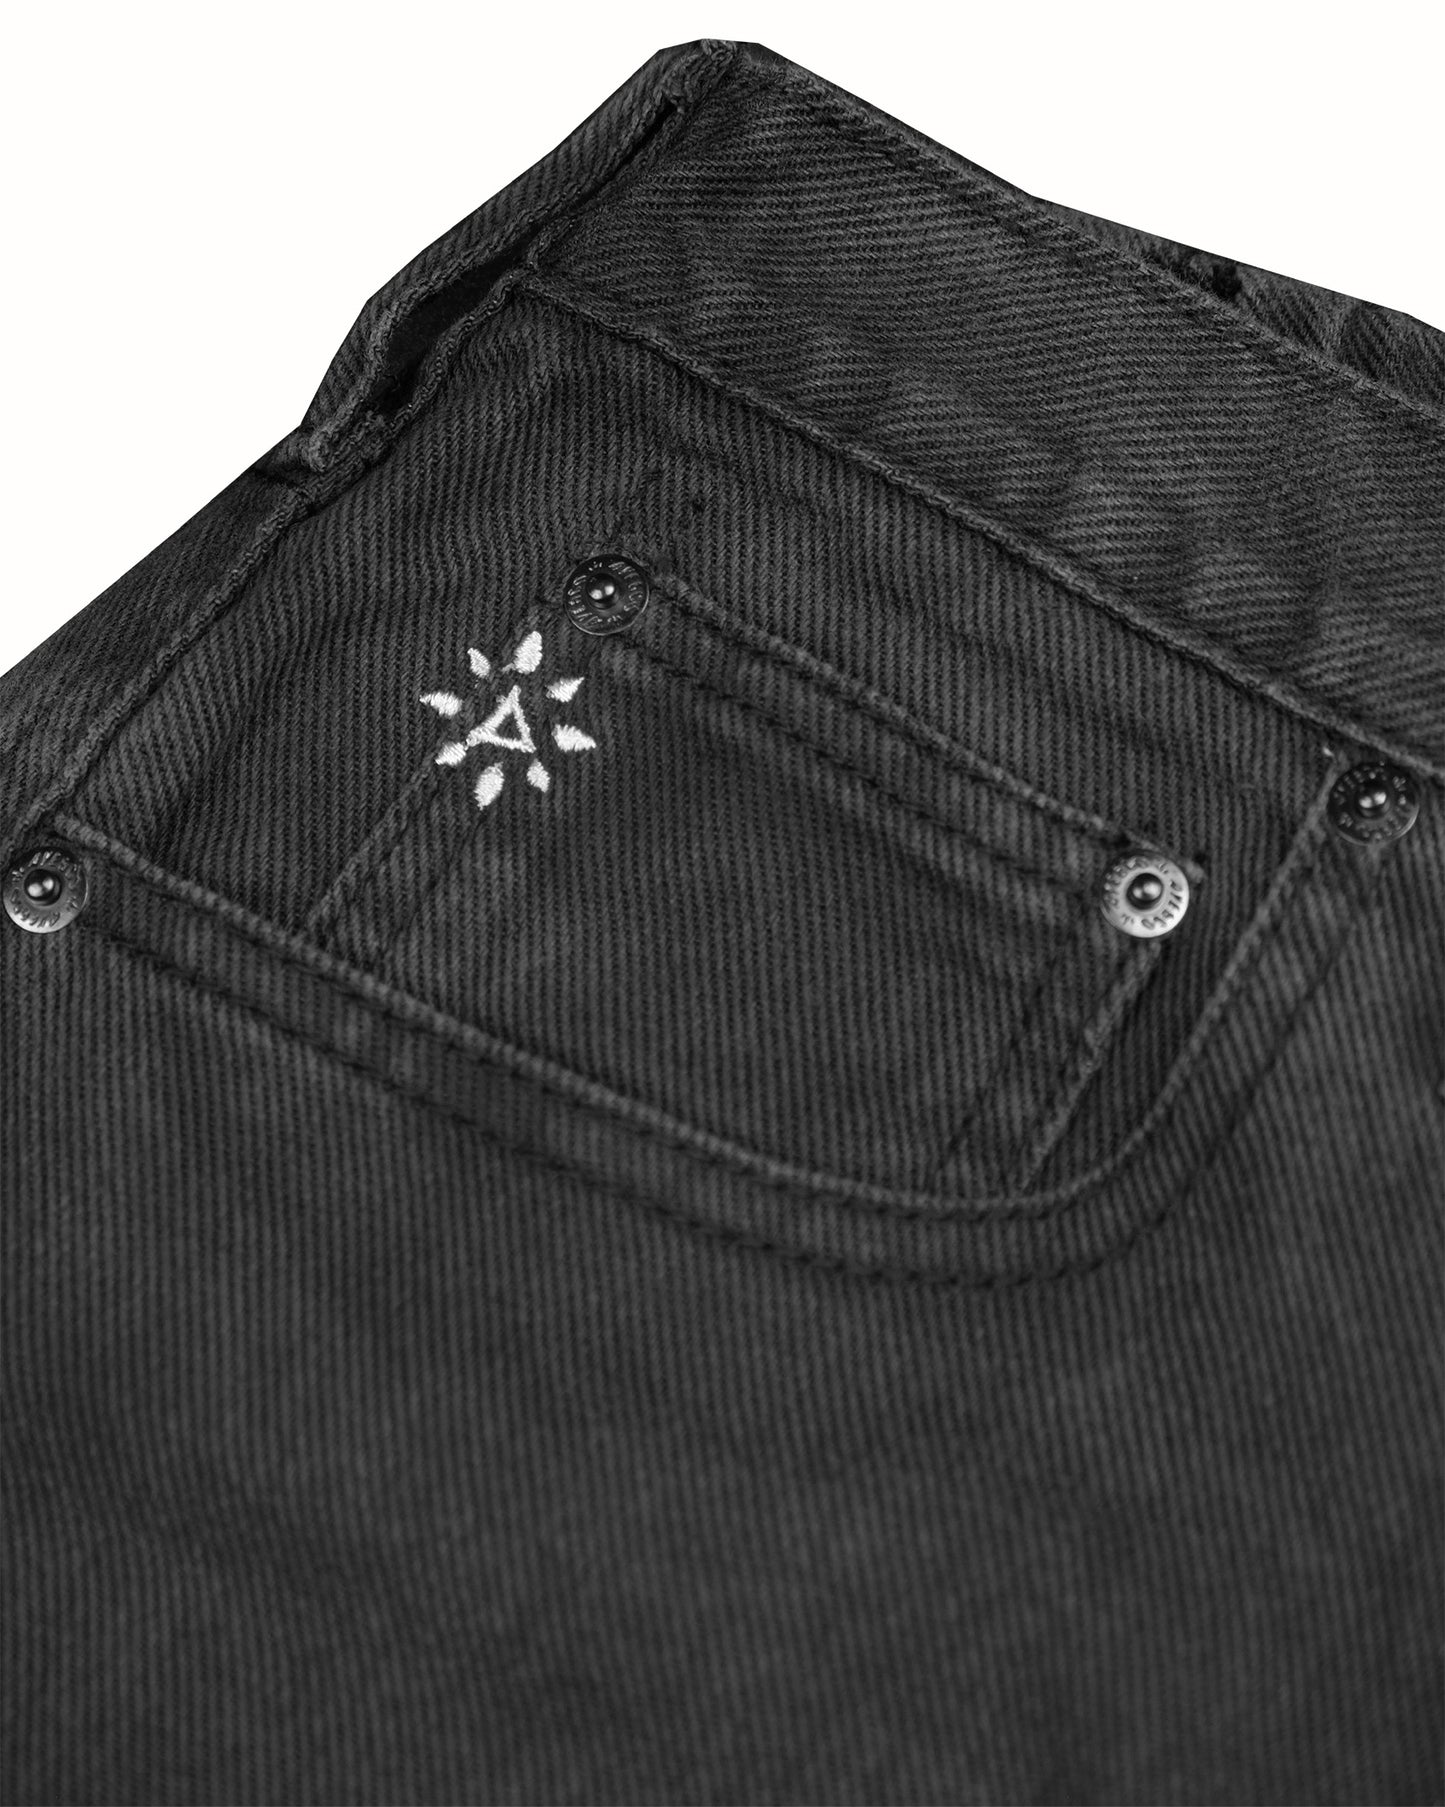 Vall Black Prewashed Jeans